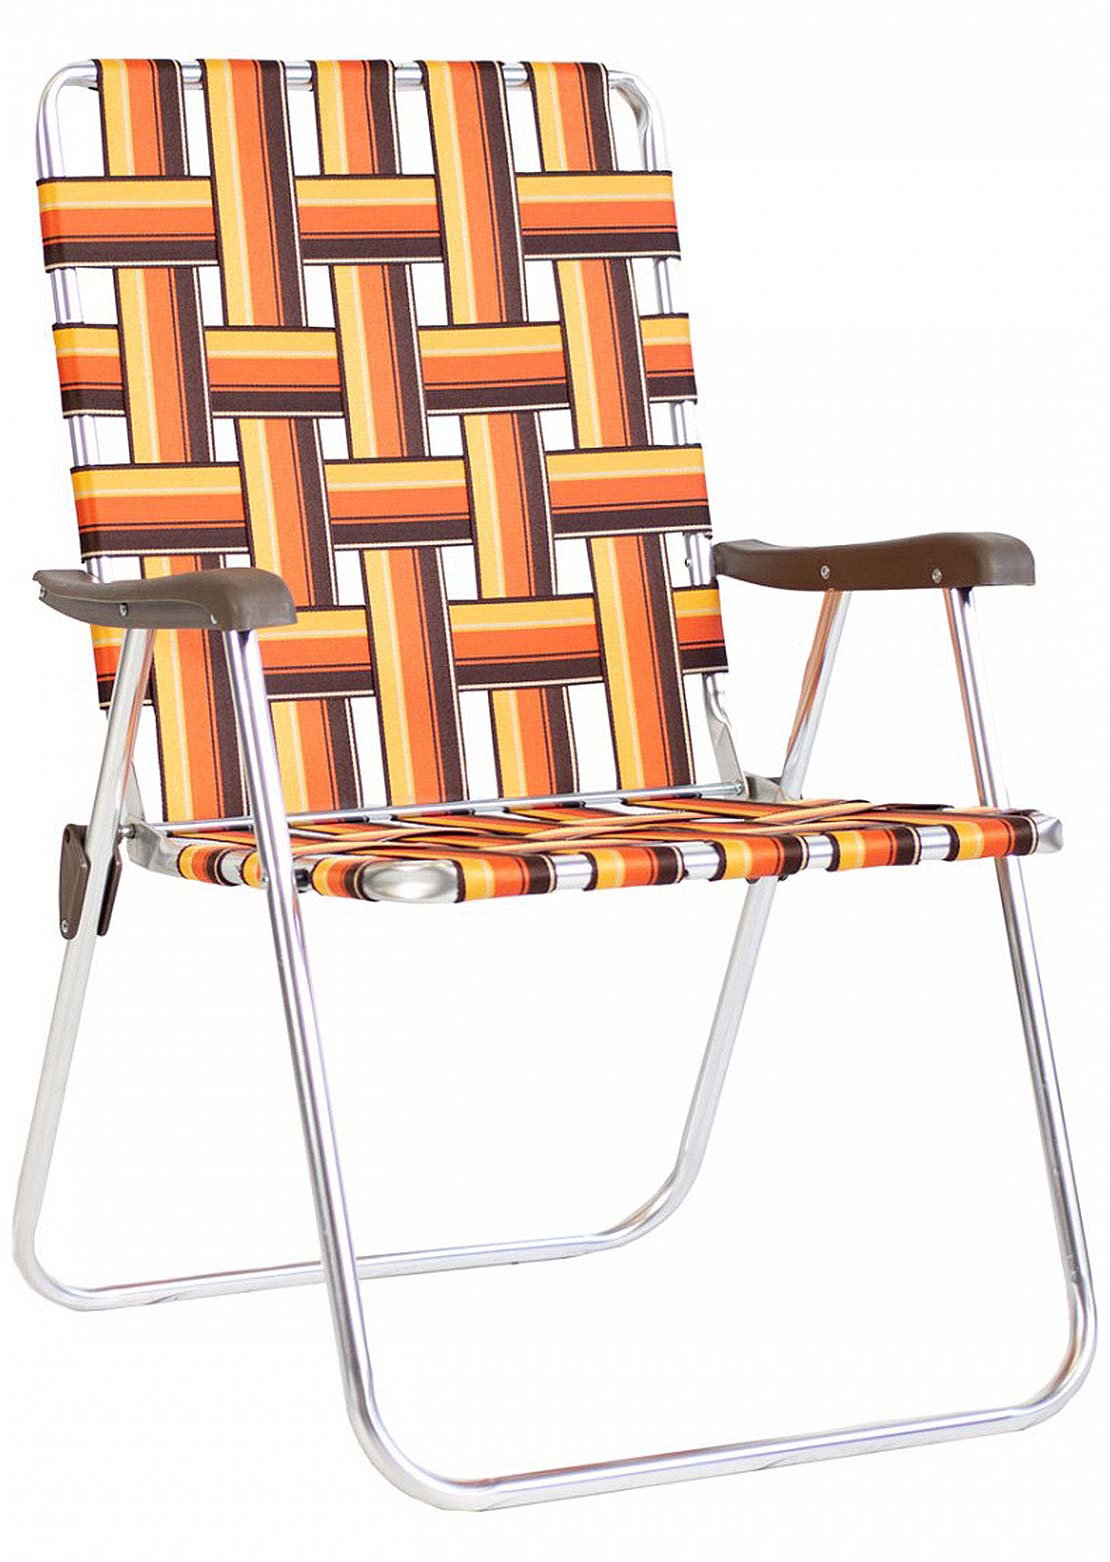 Kuma Outdoor Gear Kelso Backtrack Chair Orange/Brown